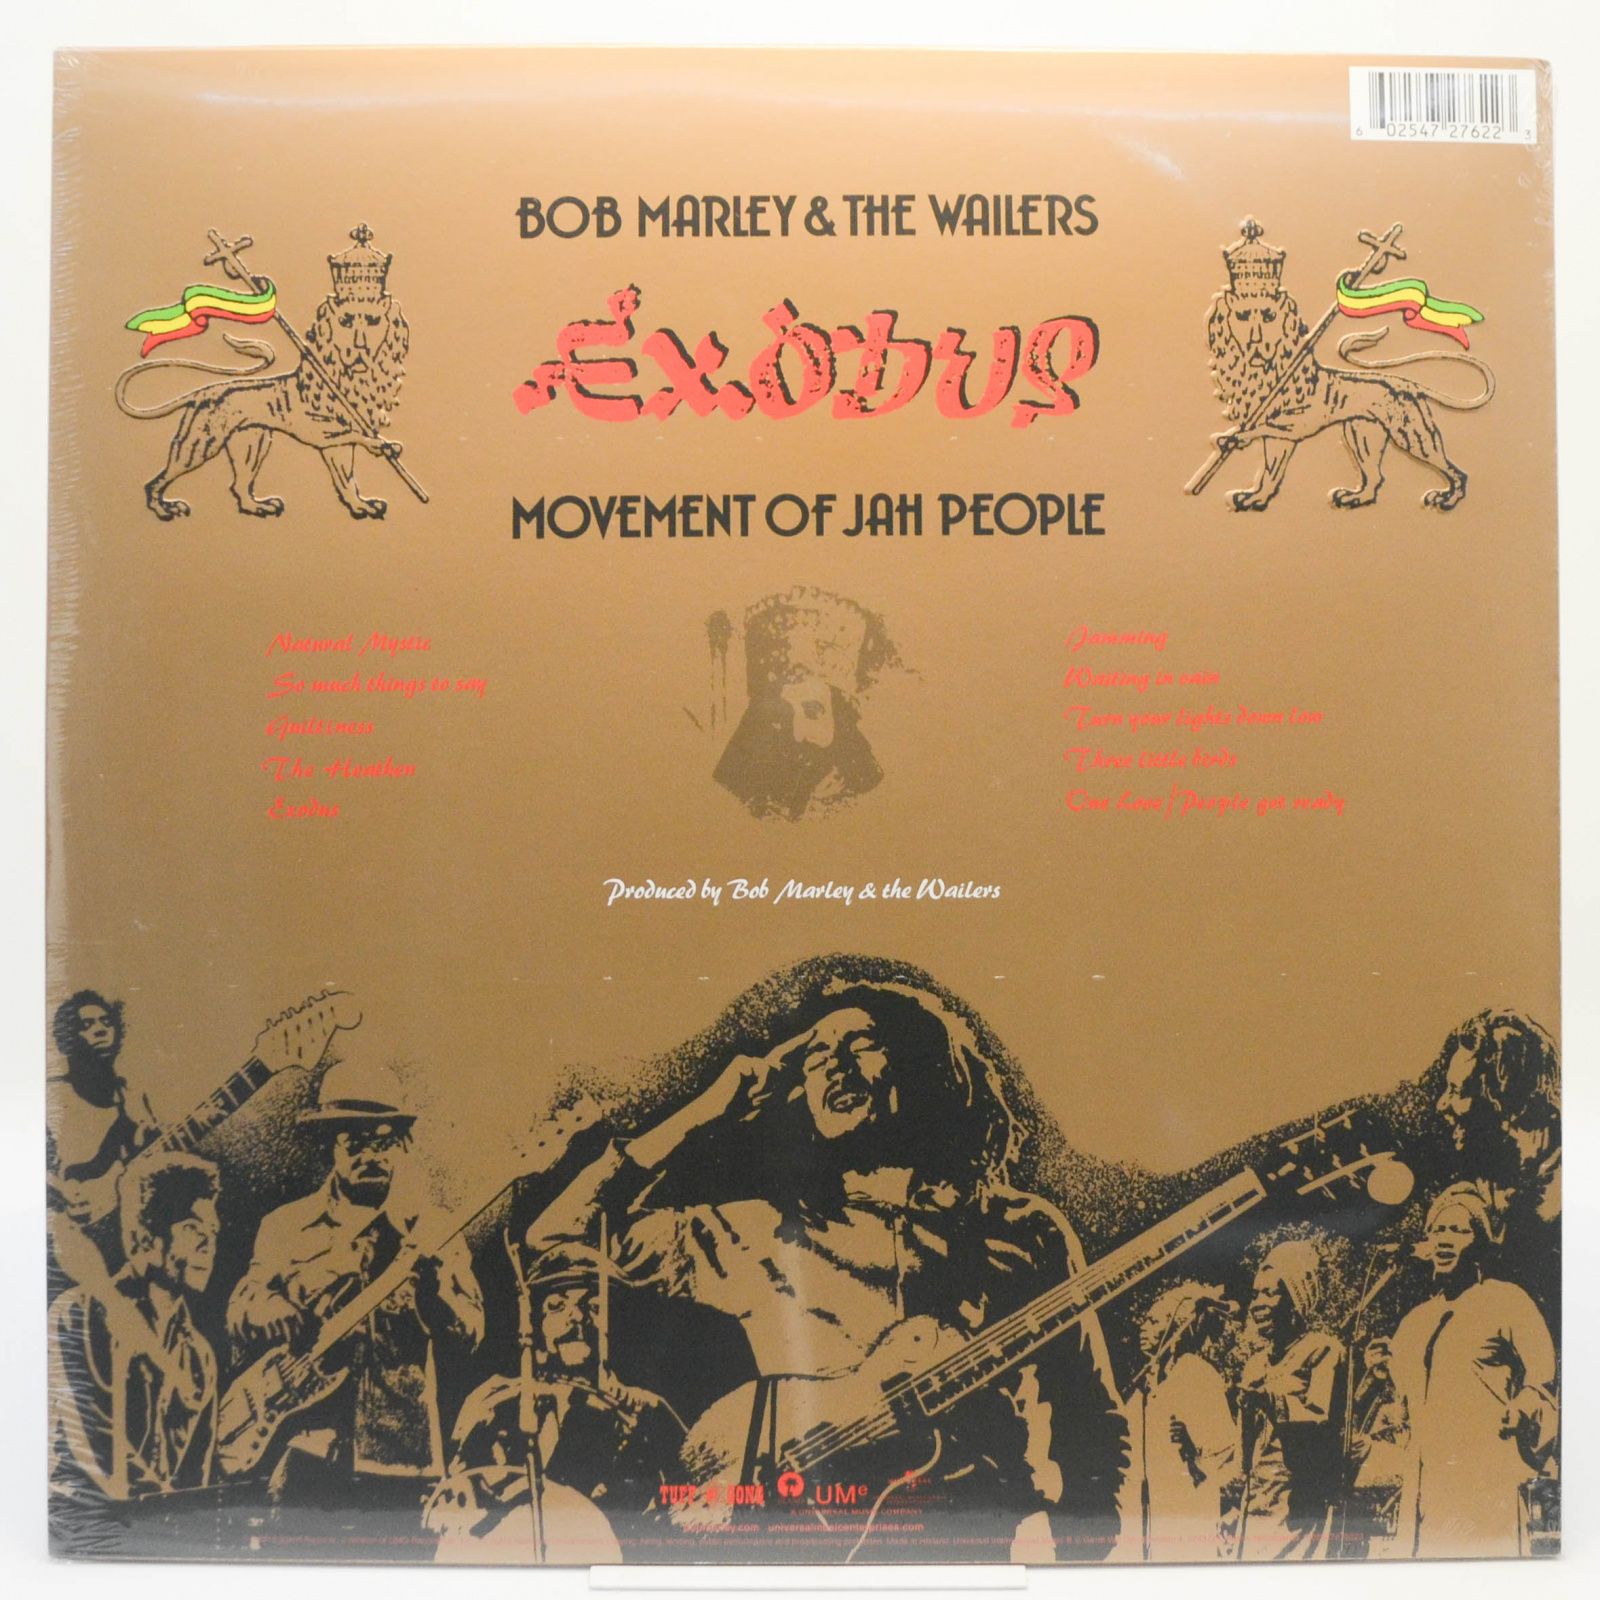 Bob Marley & The Wailers — Exodus, 1977